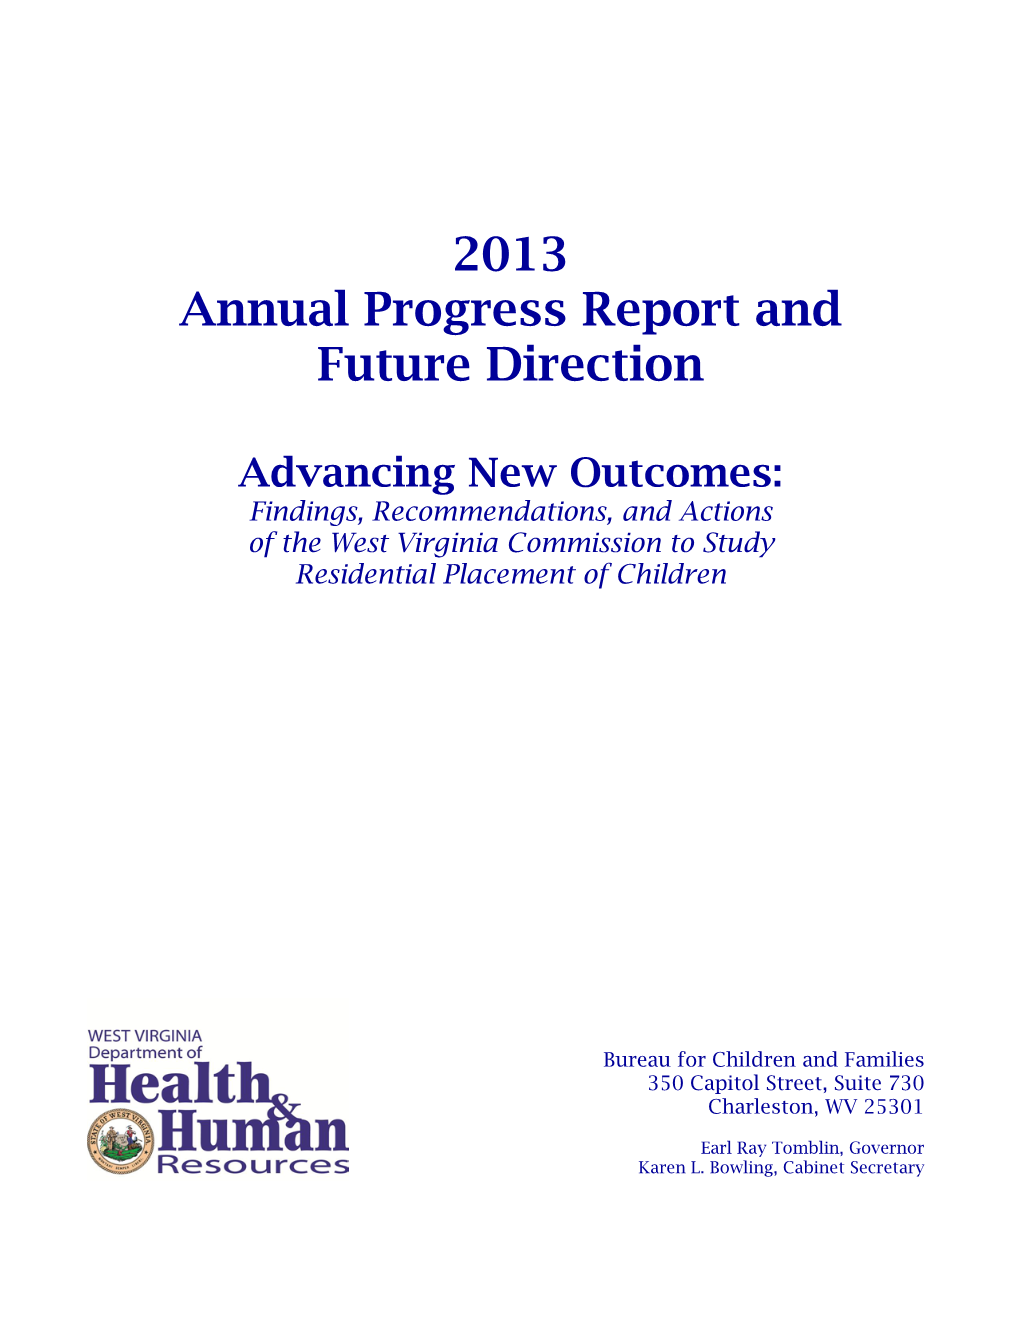 Advancing New Outcomes Progress Report 2013